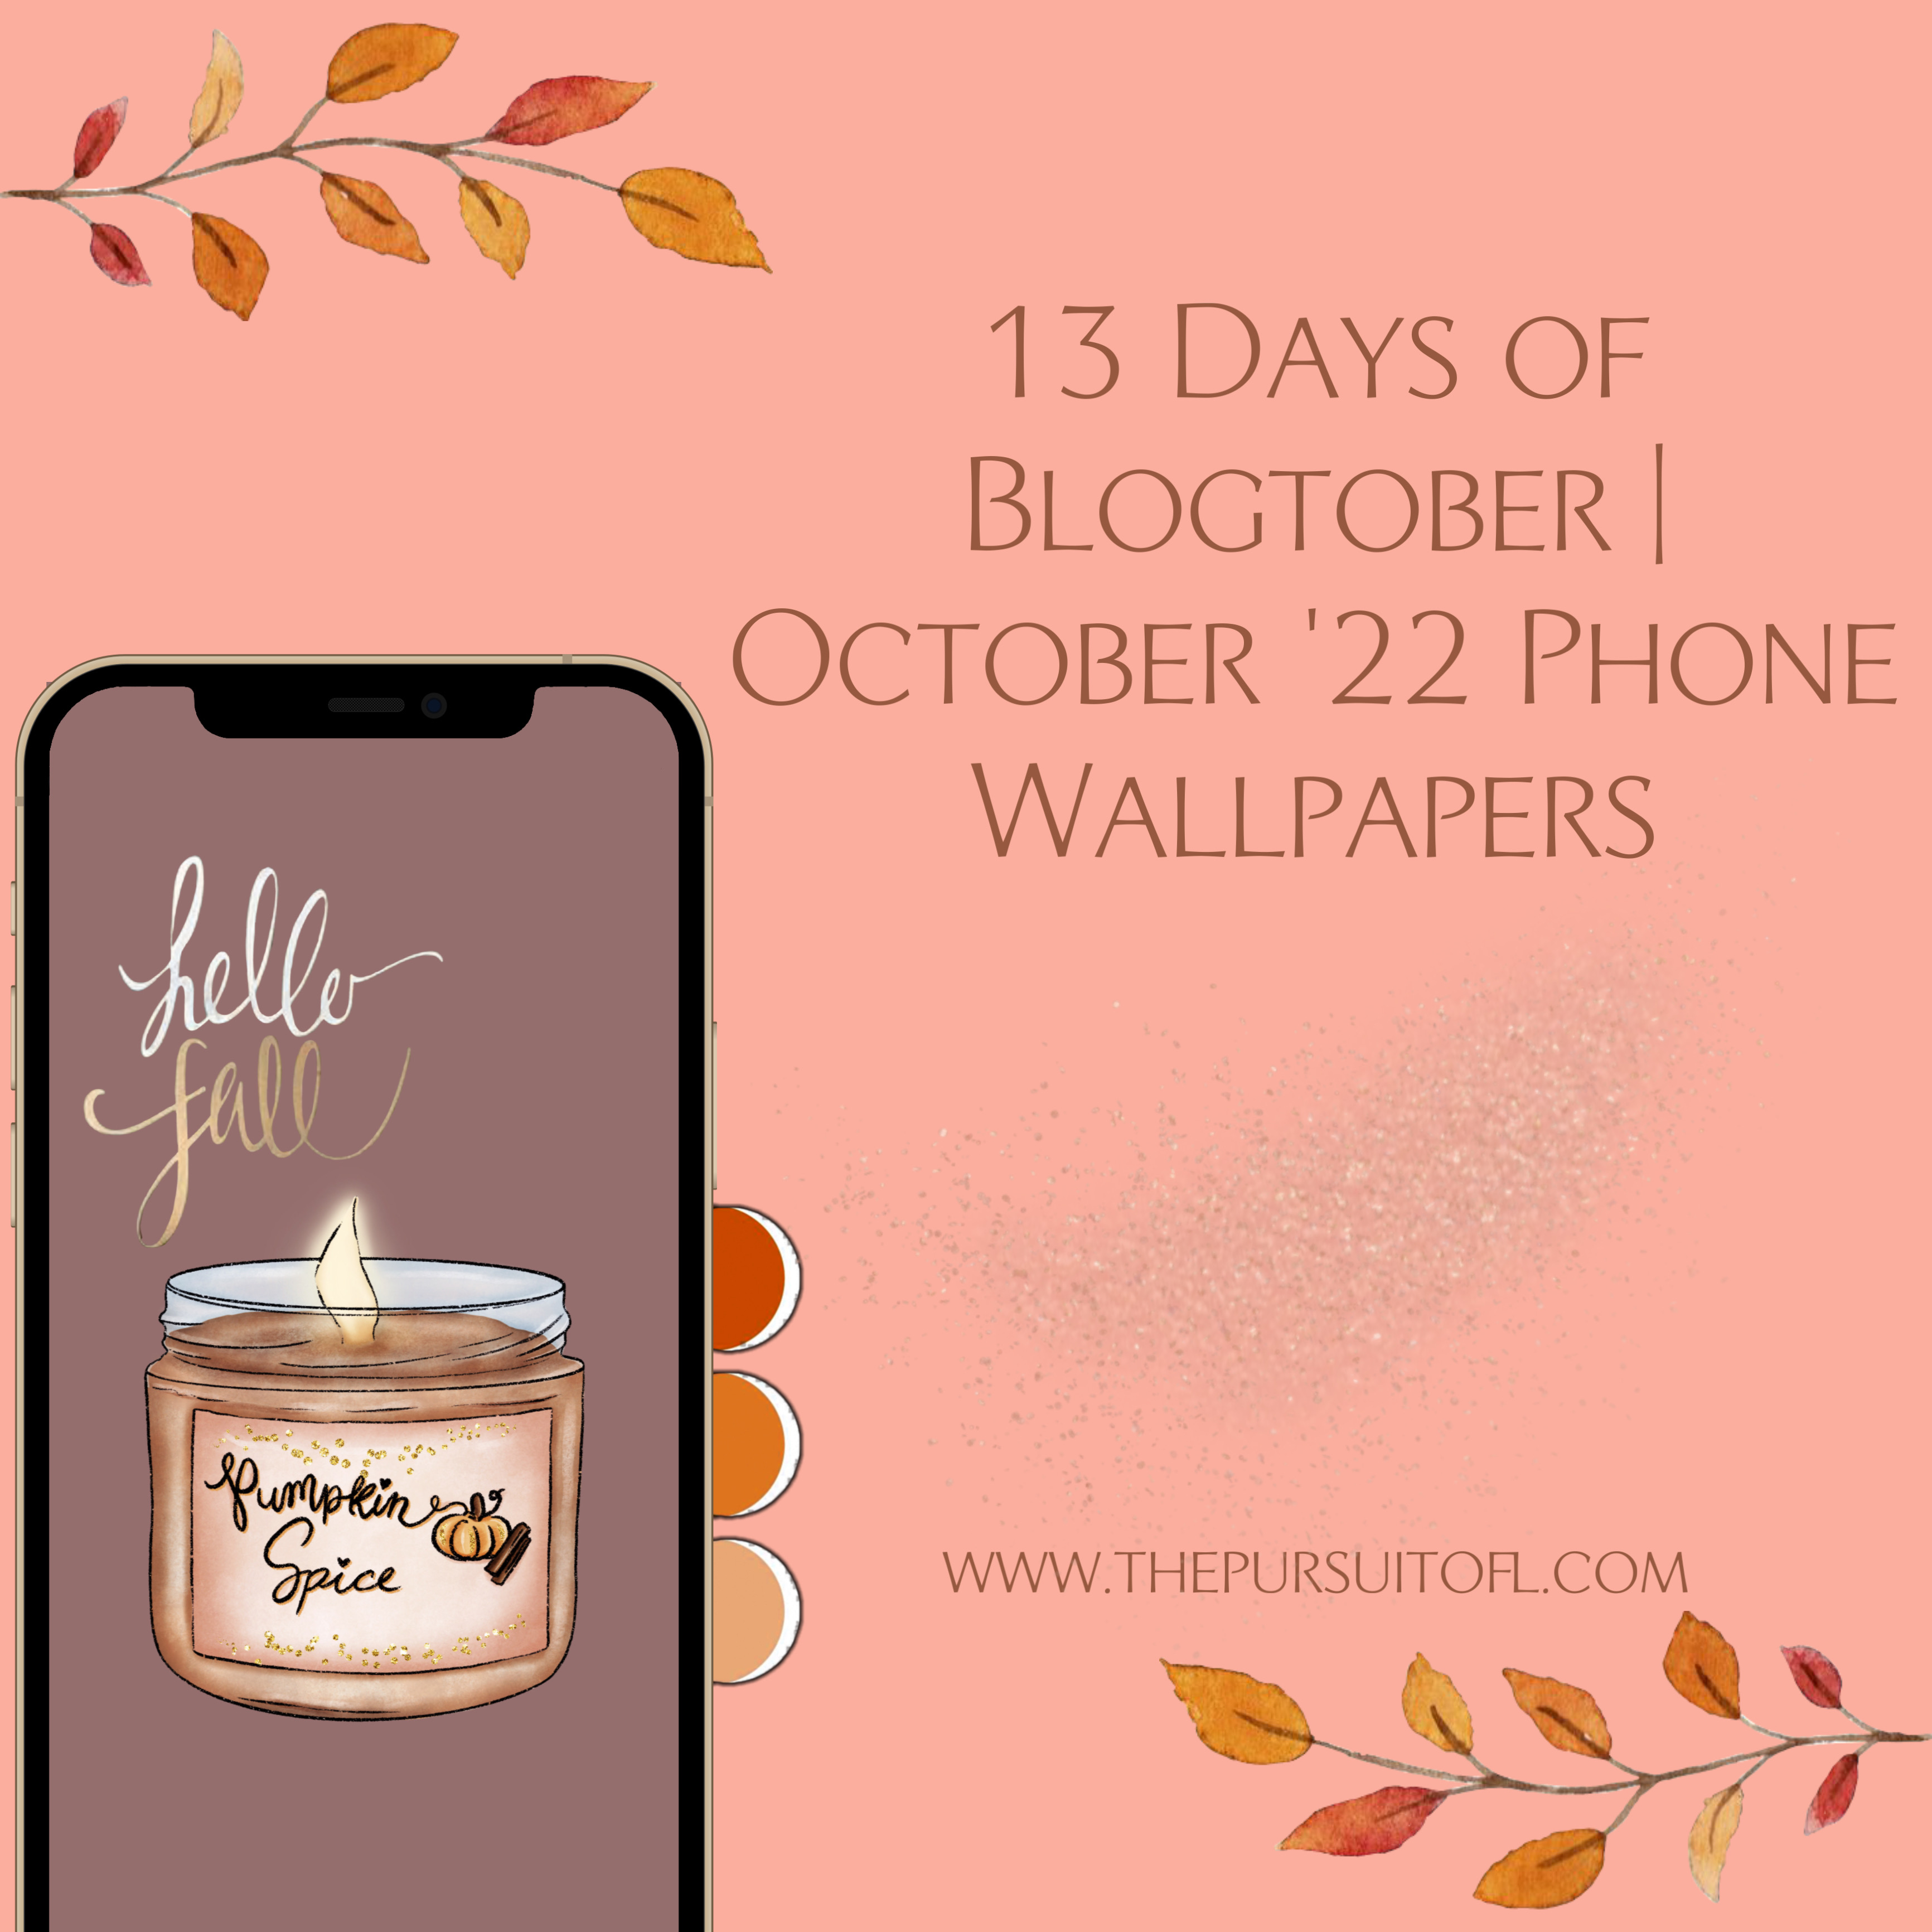 Blogtober, October 2022 Phone Wallpapers